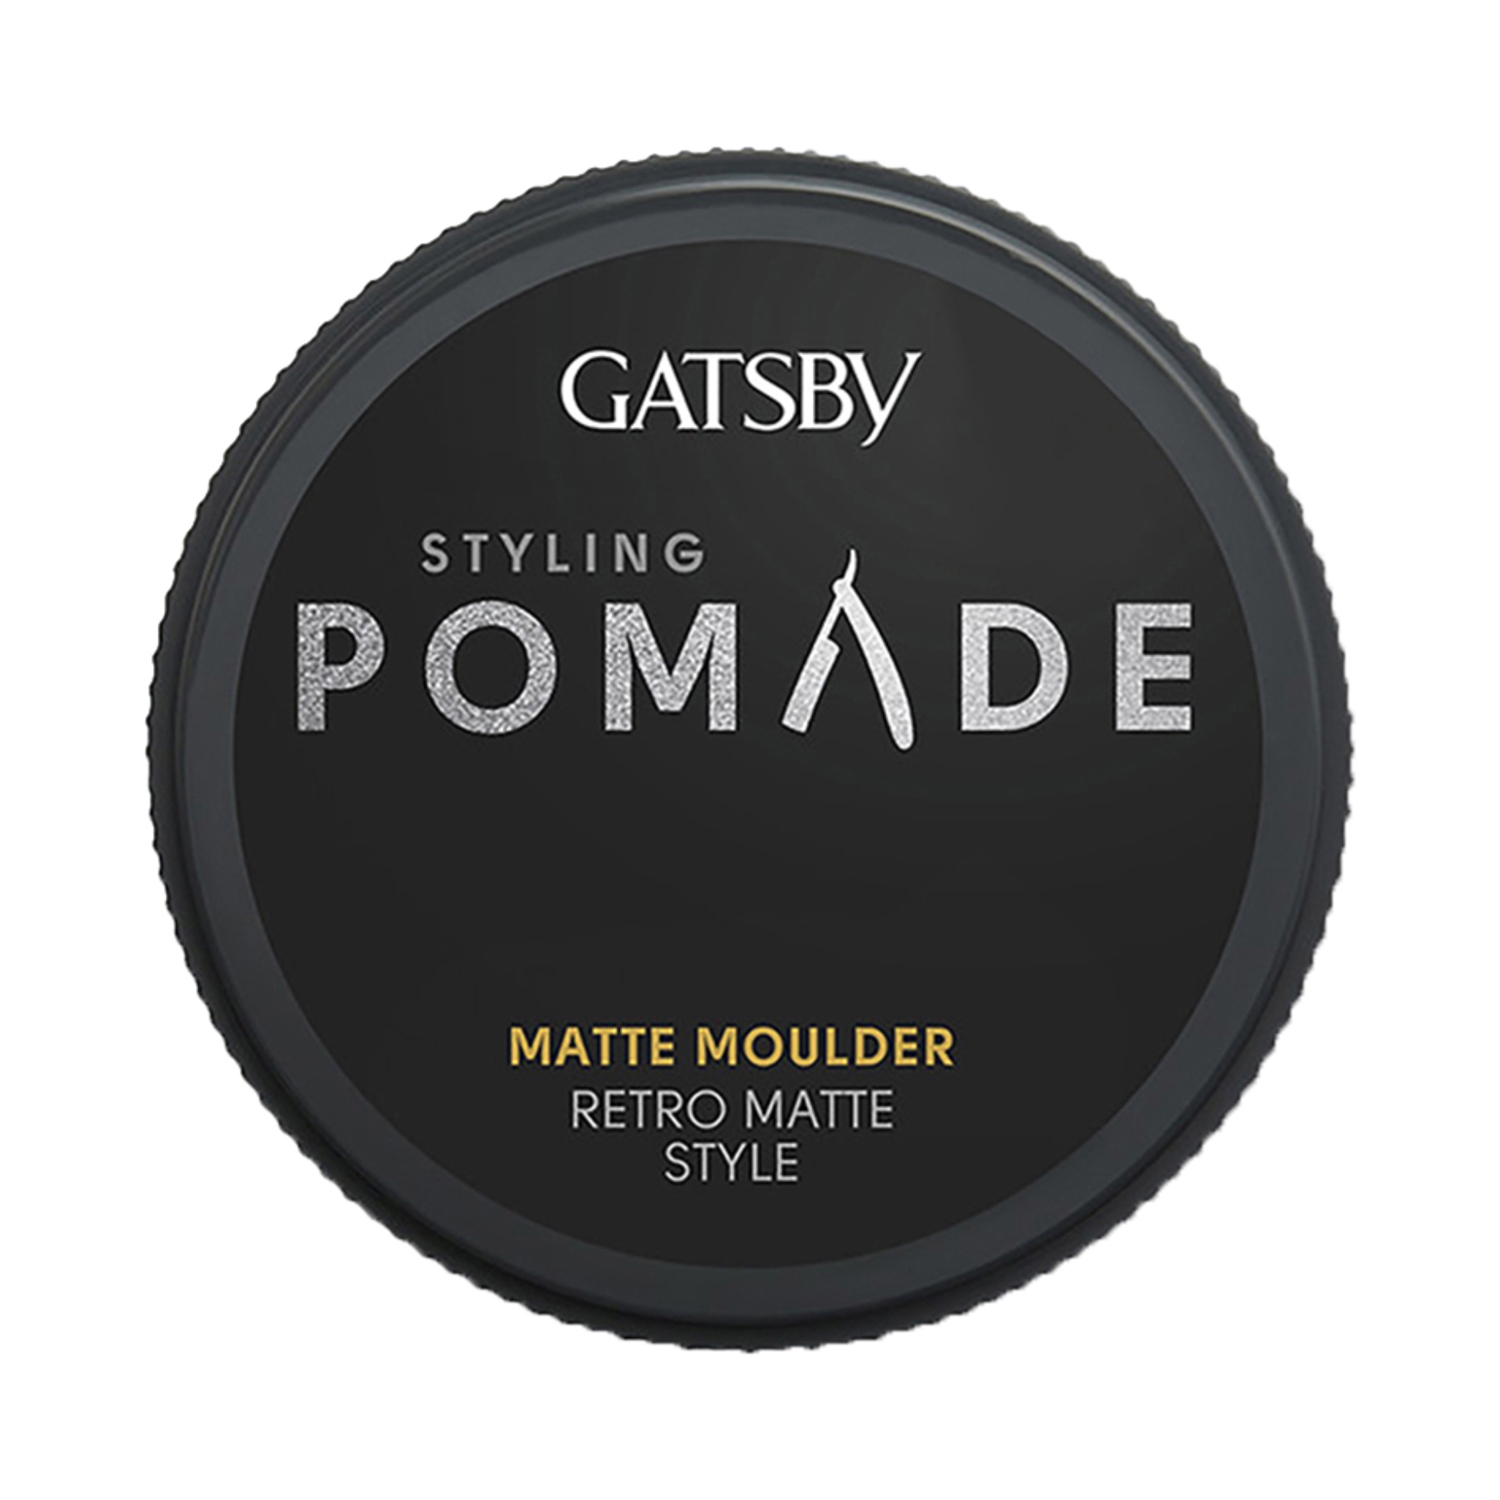 Gatsby Matte Moulder Styling Pomade (75g)